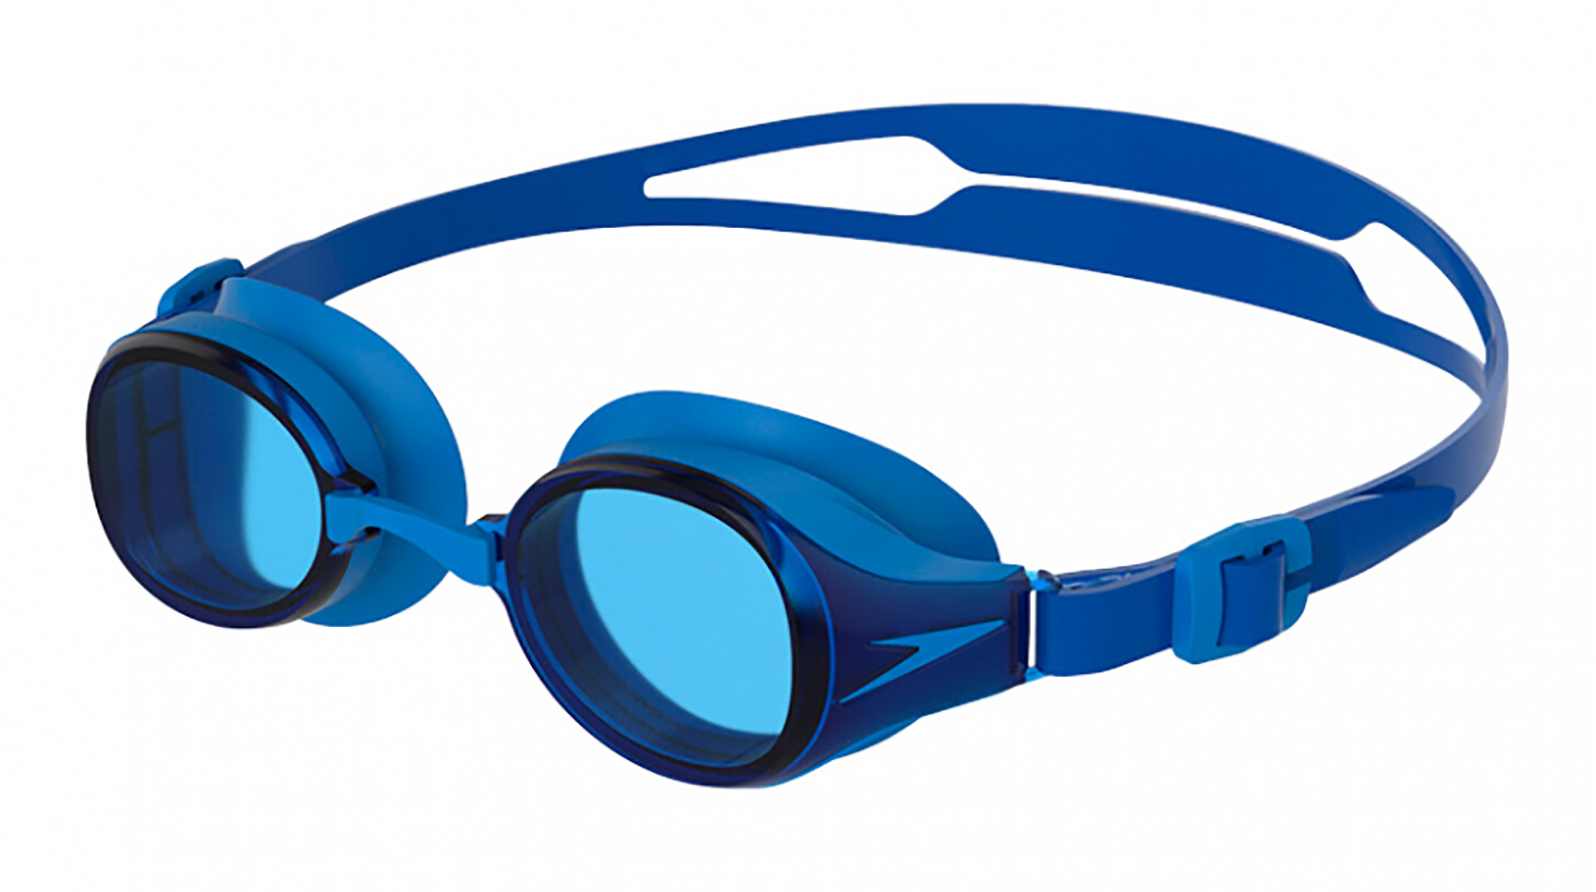 Speedo Очки для плавания Hydropure Optical F809 -5.5 speedo очки для плавания hydropure optical f809 5 0